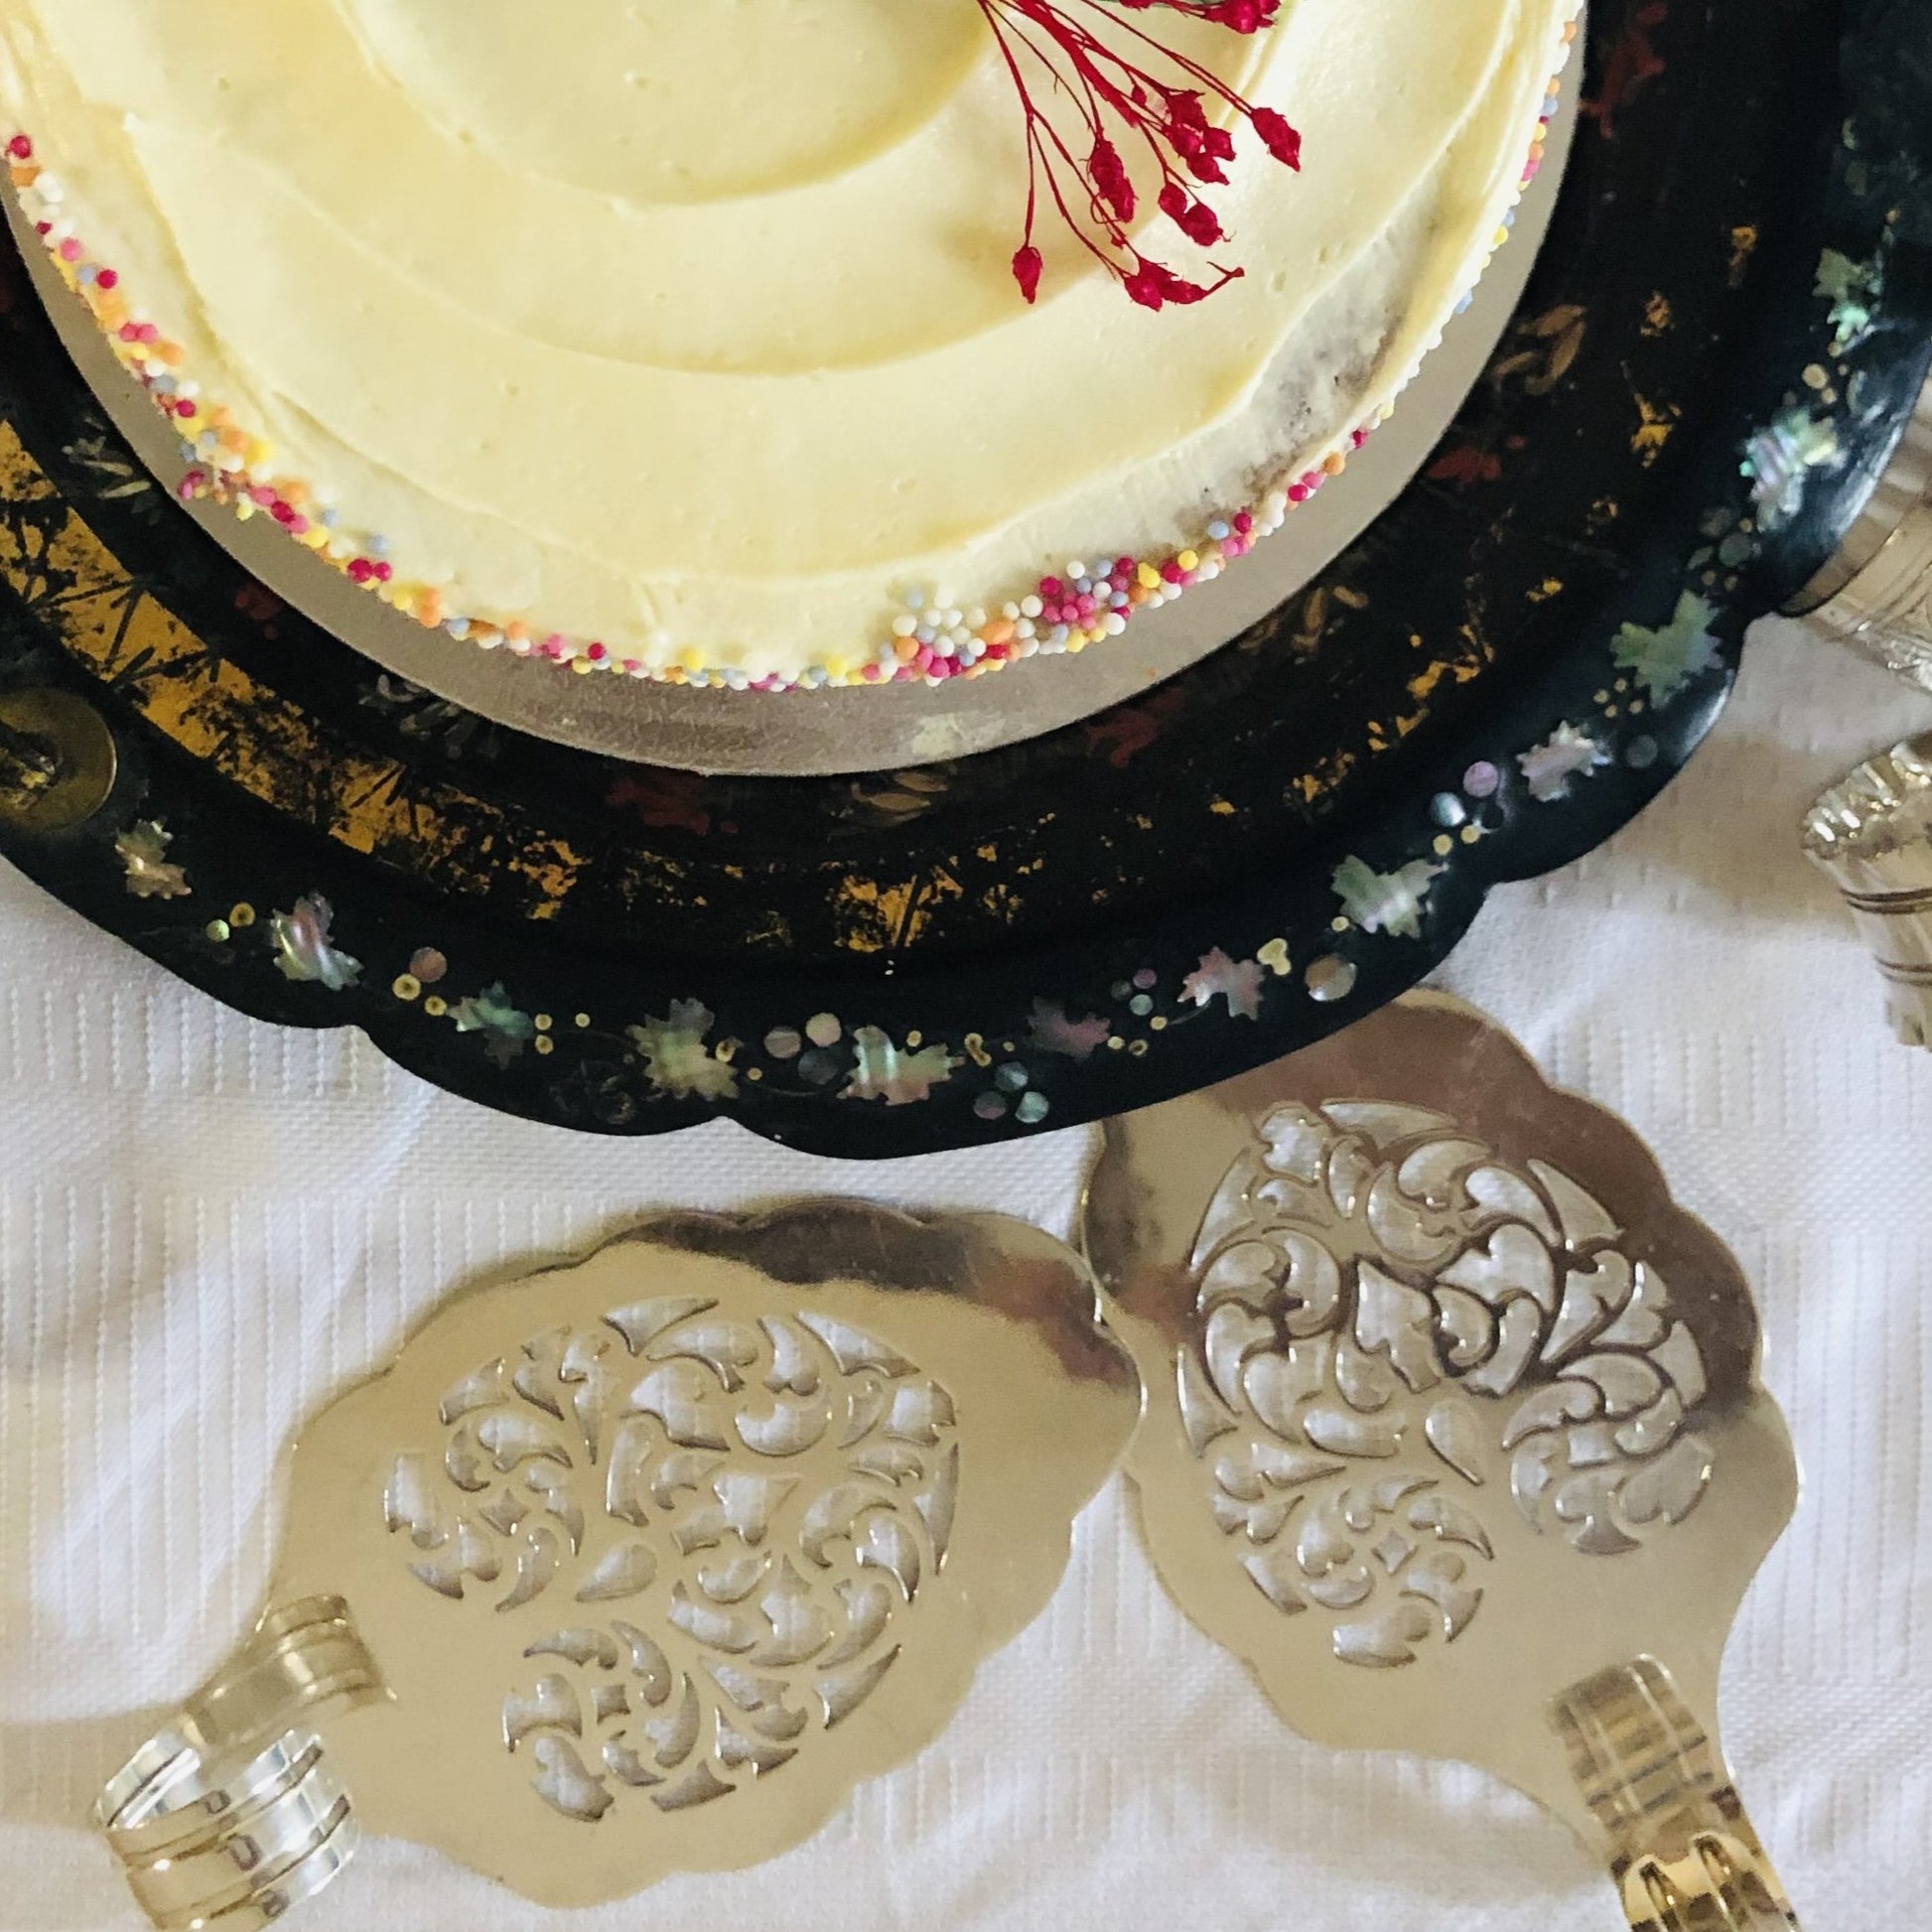 Antique Silver Cake Server | Wedding Cake Slice